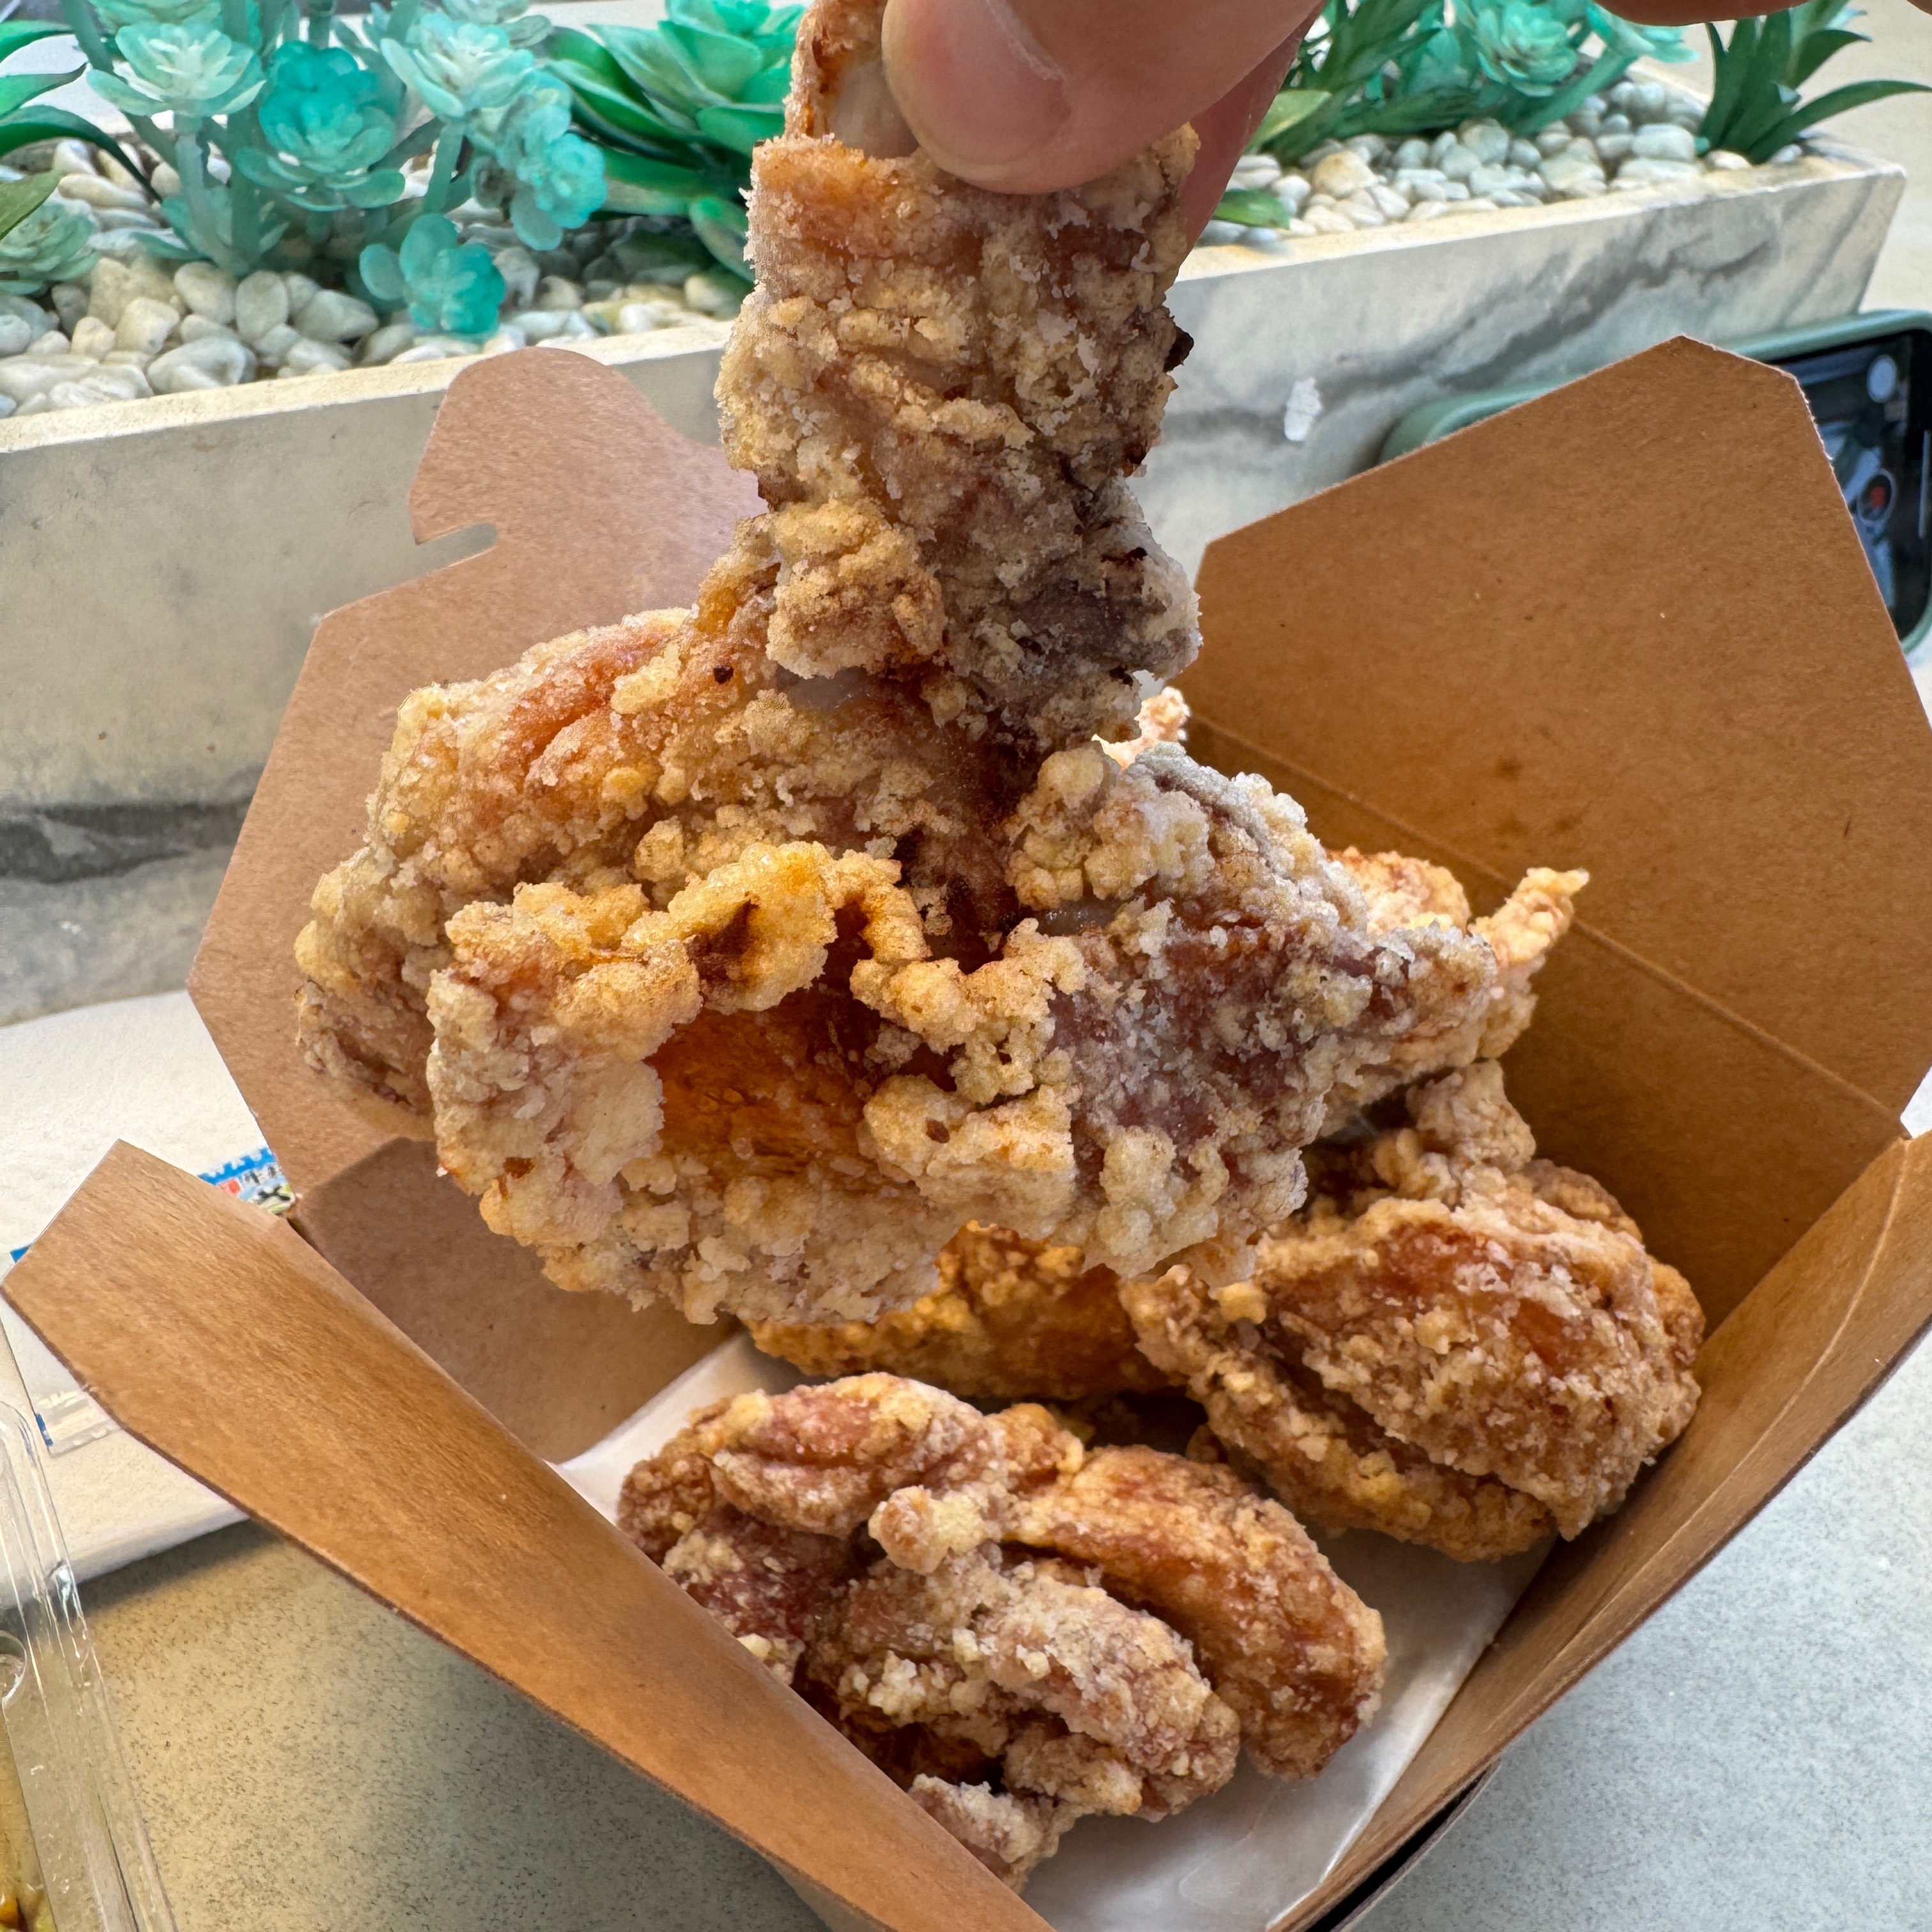 Fried Chicken Thigh (5pc) $7.50 from Tenkatori Karaage on #foodmento http://foodmento.com/dish/57874